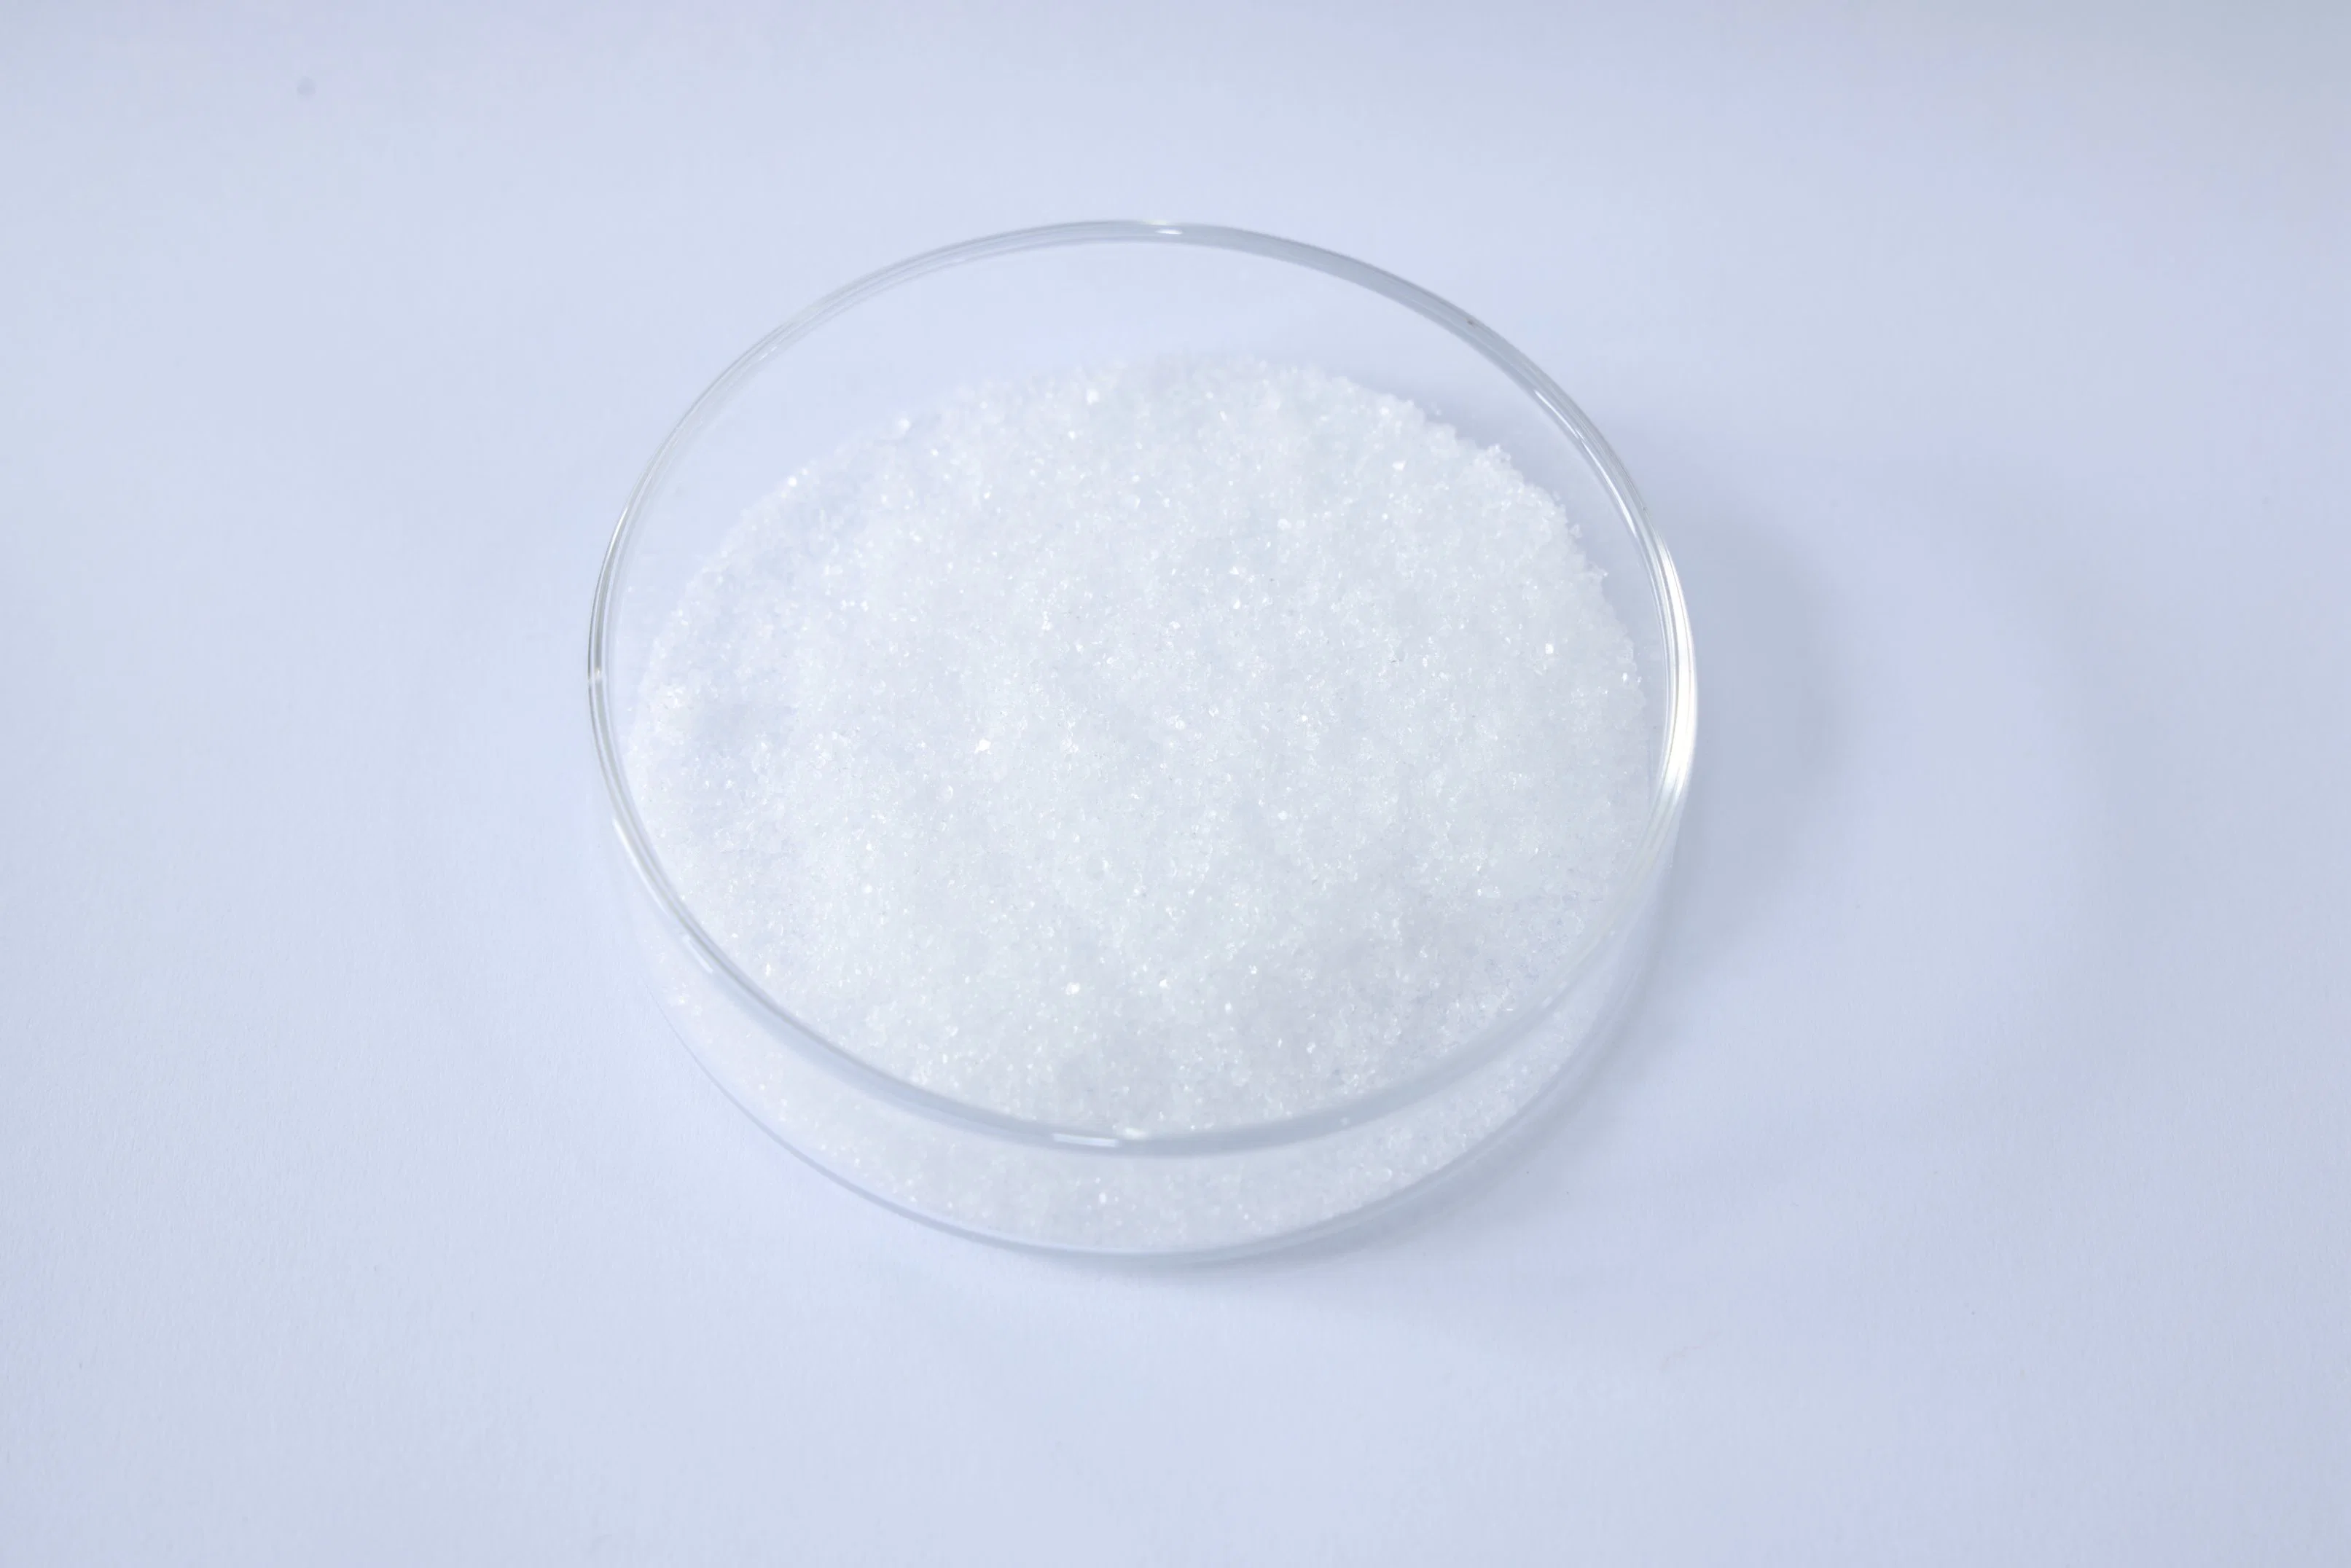 Suplemento de fábrica; Mopso sal sódica; 3-Morpholino-2-Hydroxypropa Nesulfonic sal sódica del ácido